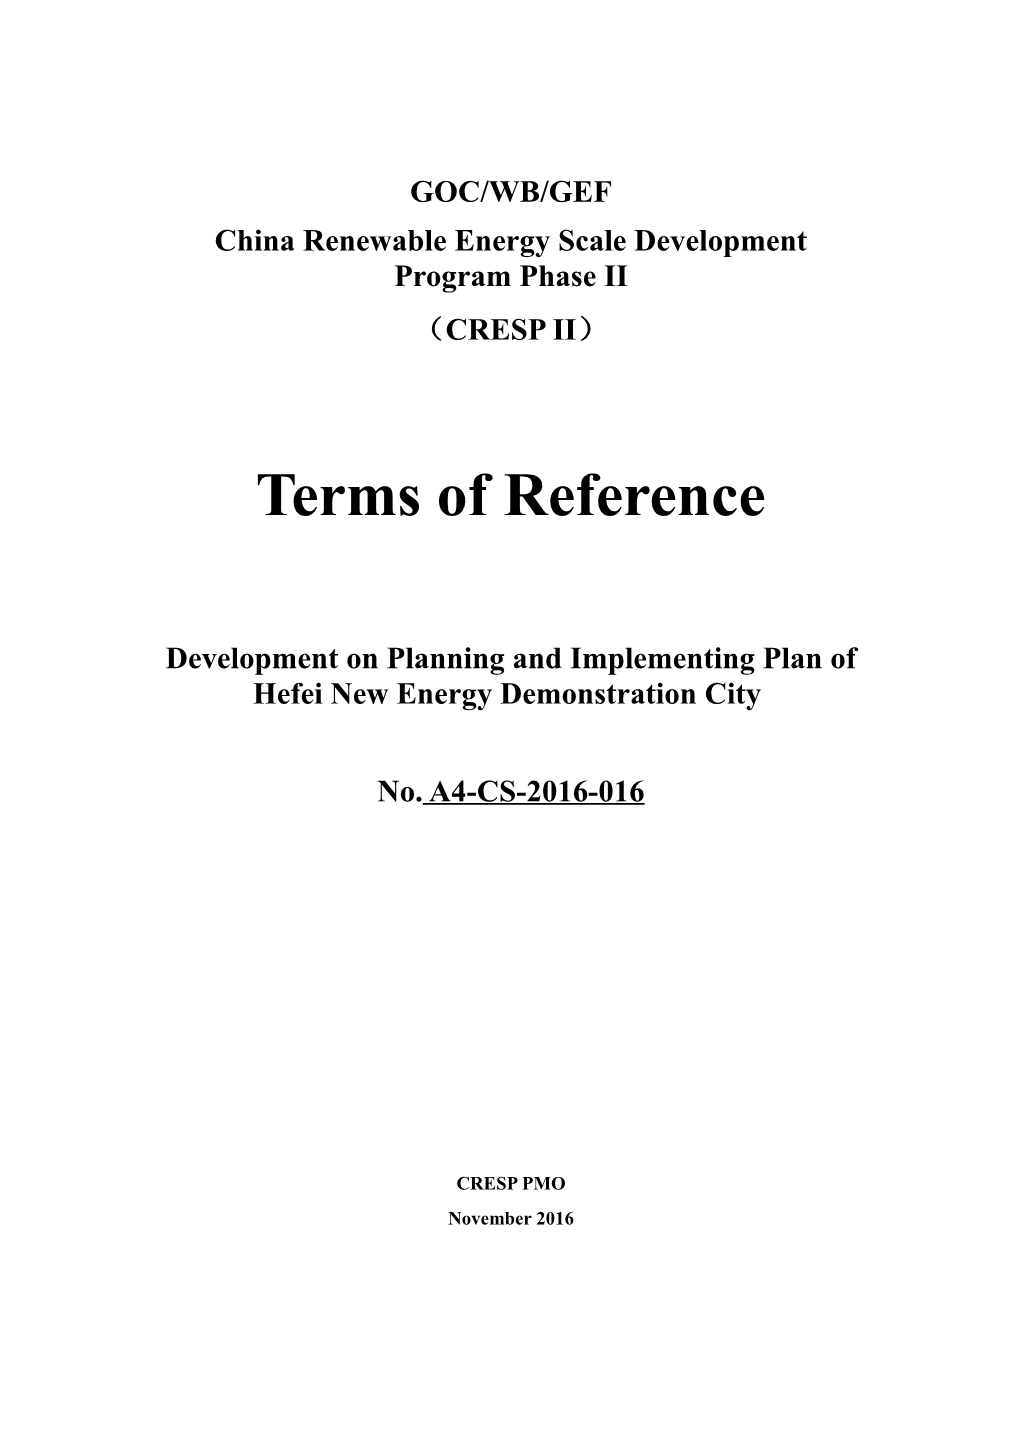 China Renewable Energy Scale Development Program Phase II